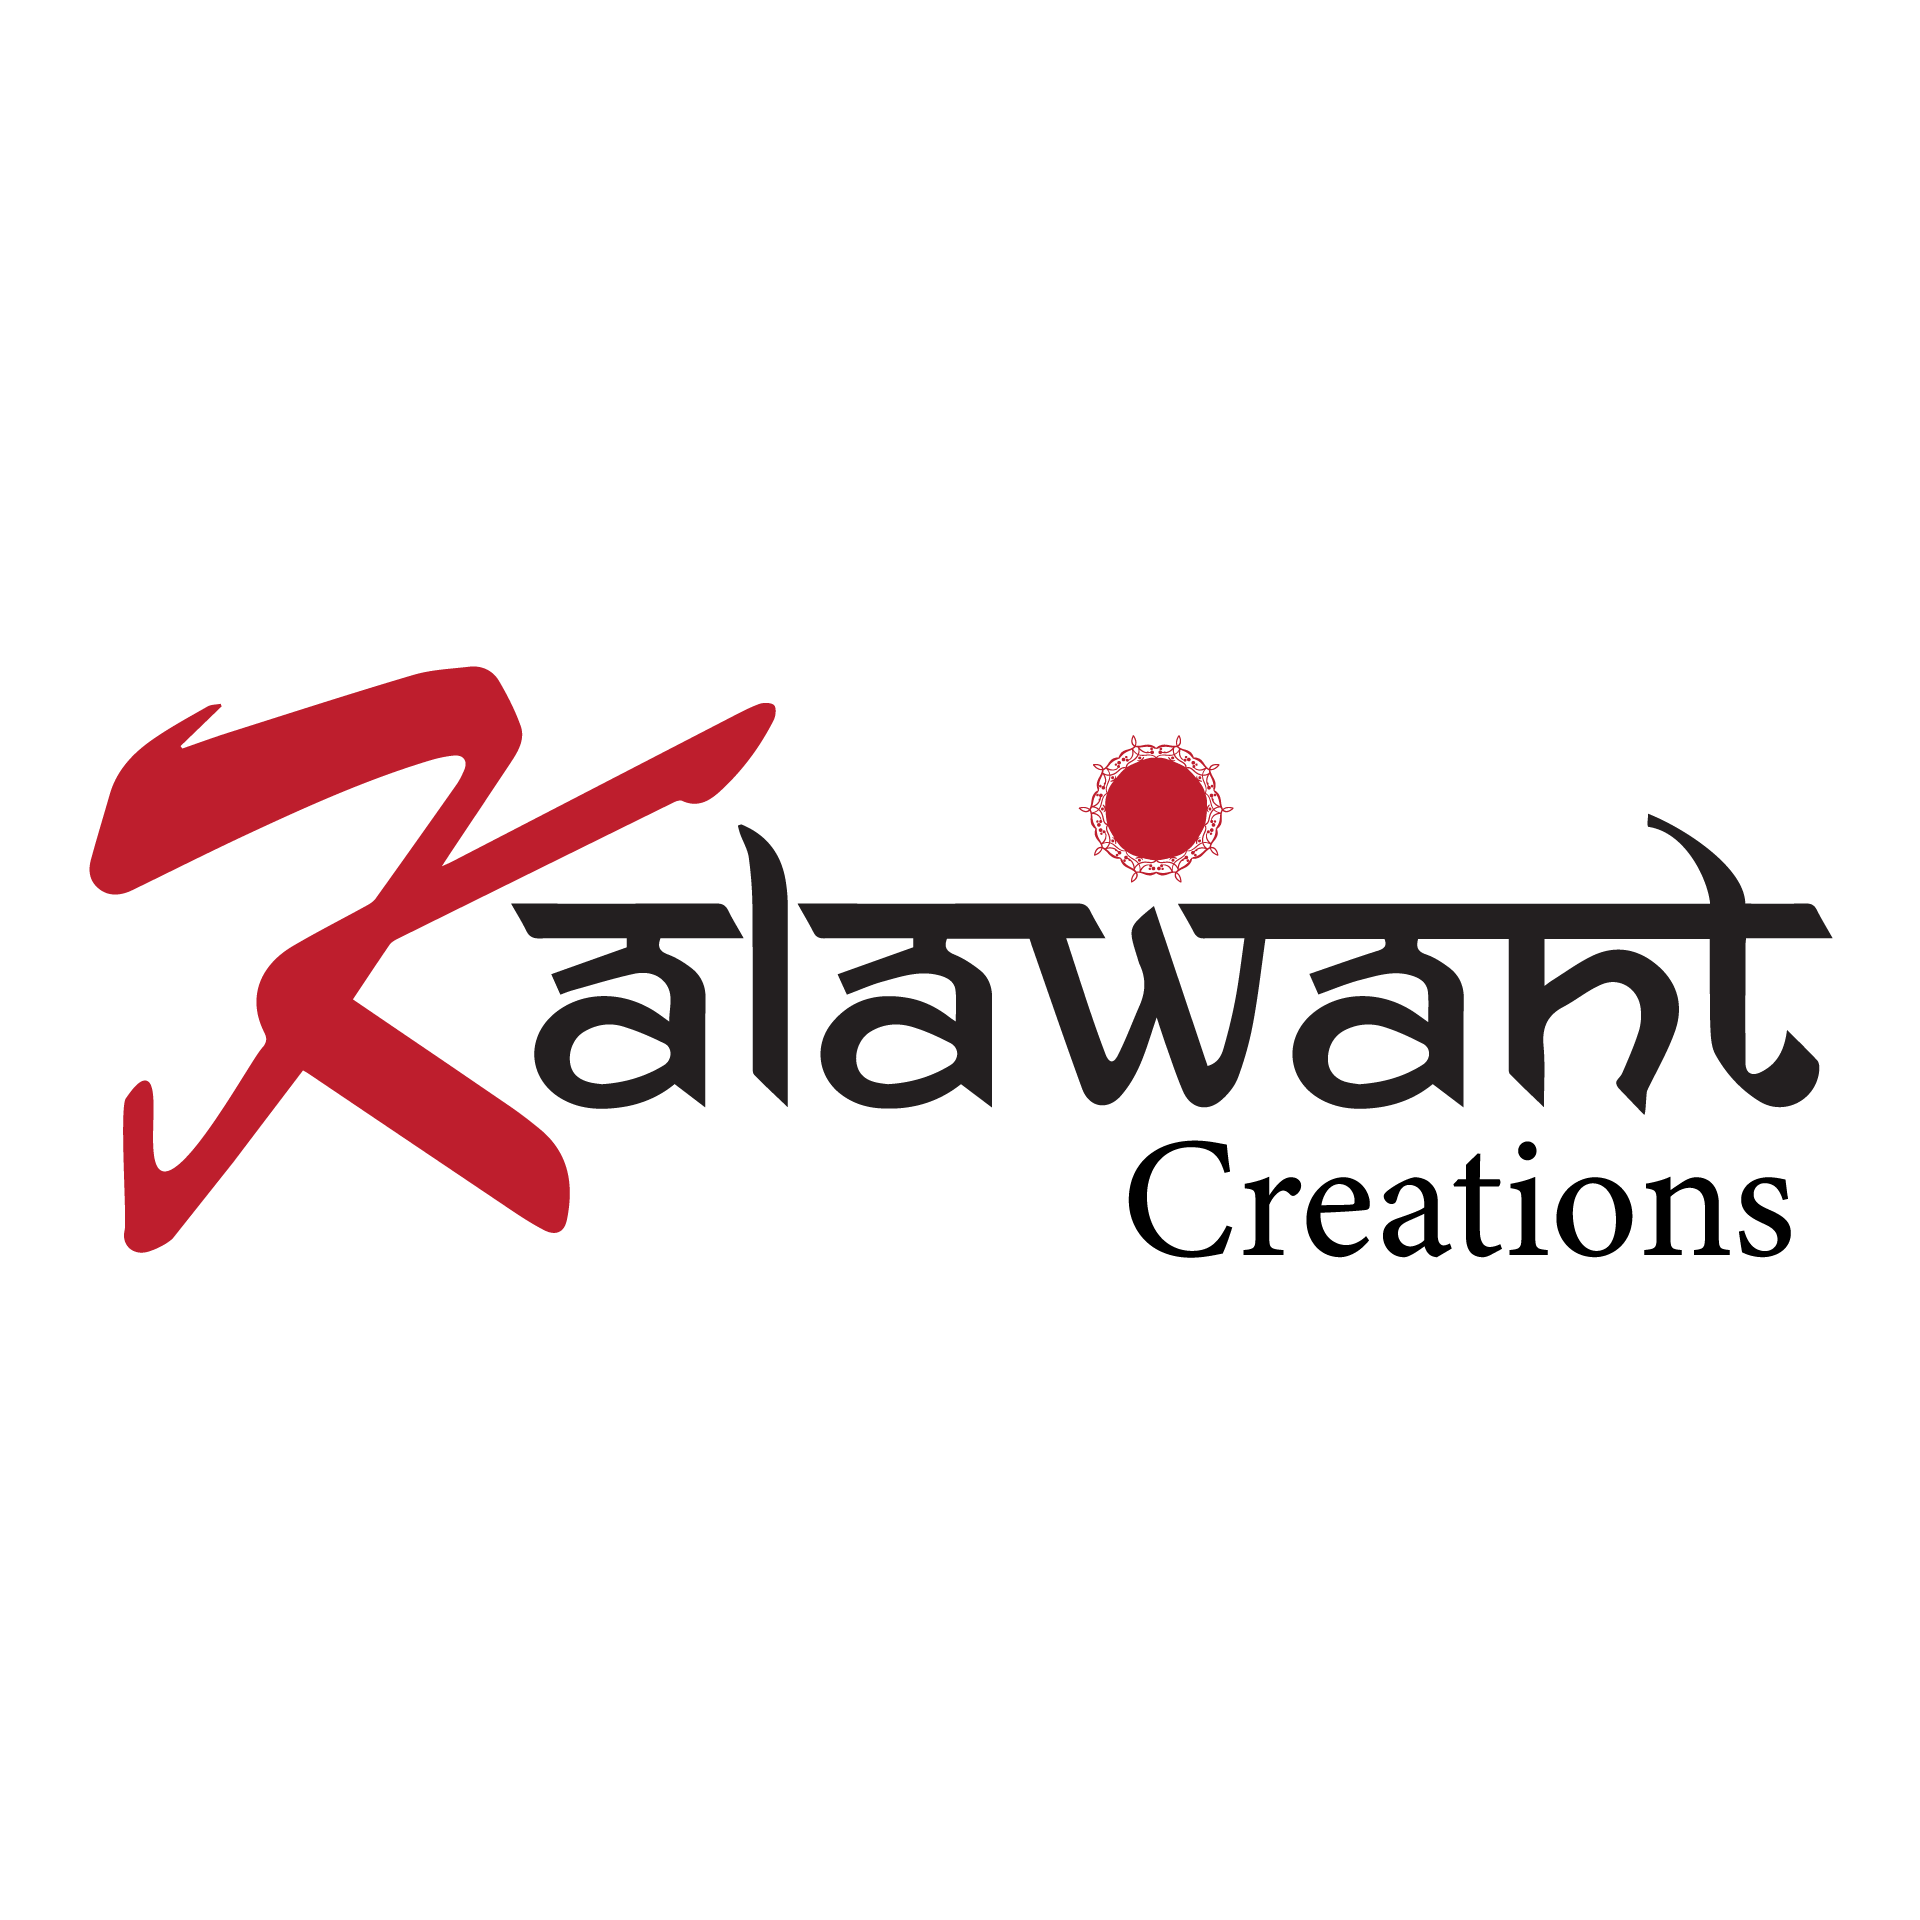 Kalawant Creations Logo